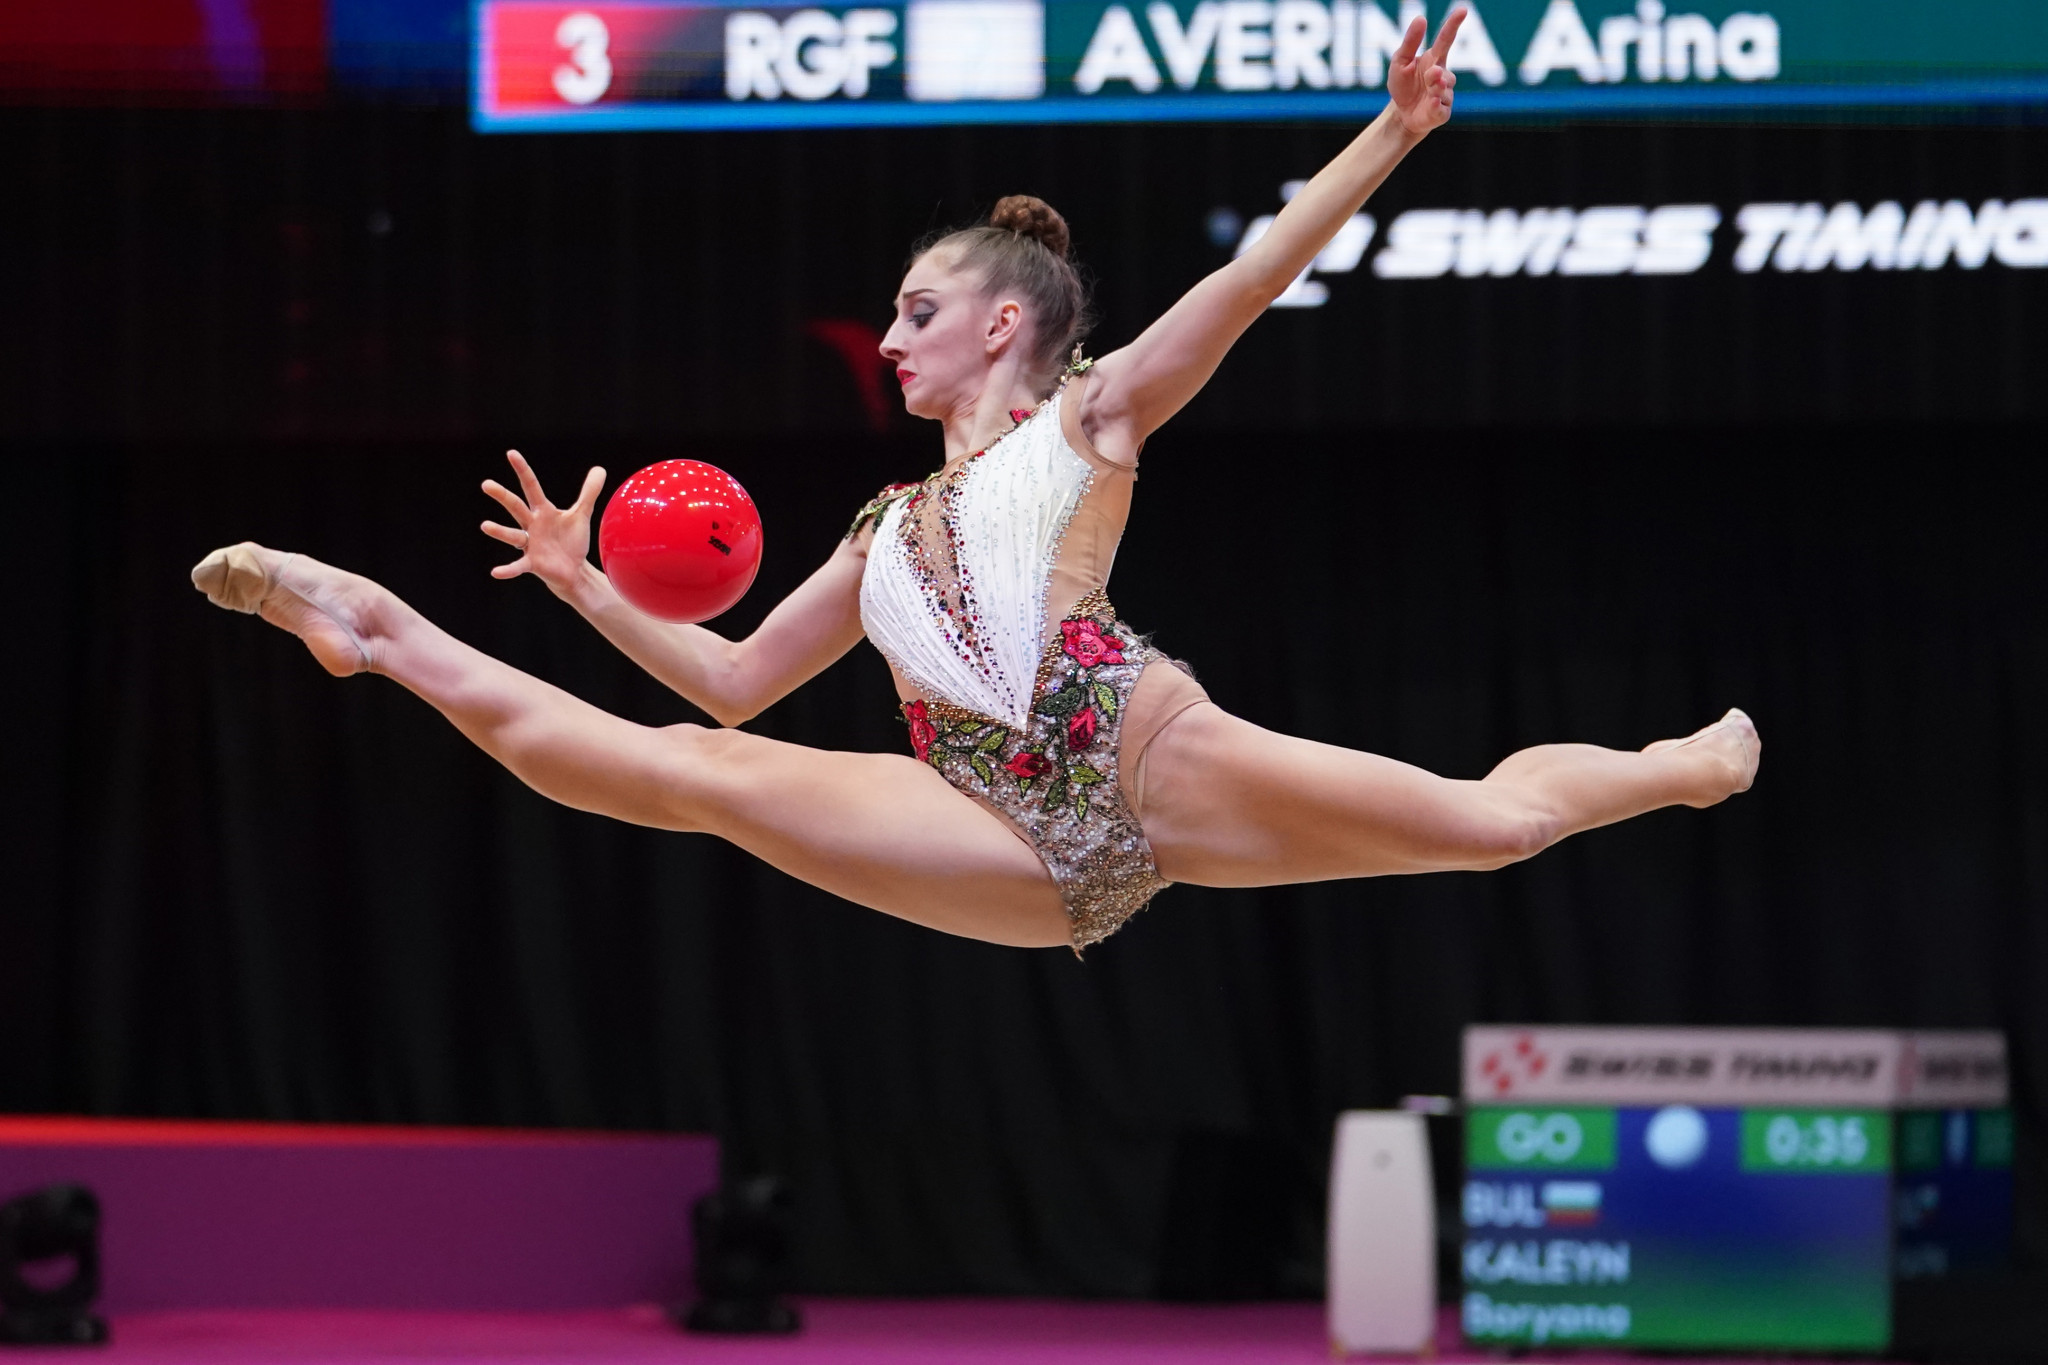 Kaleyn shows killer instincts as she takes two golds at FIG Rhythmic Gymnastics World Challenge Cup